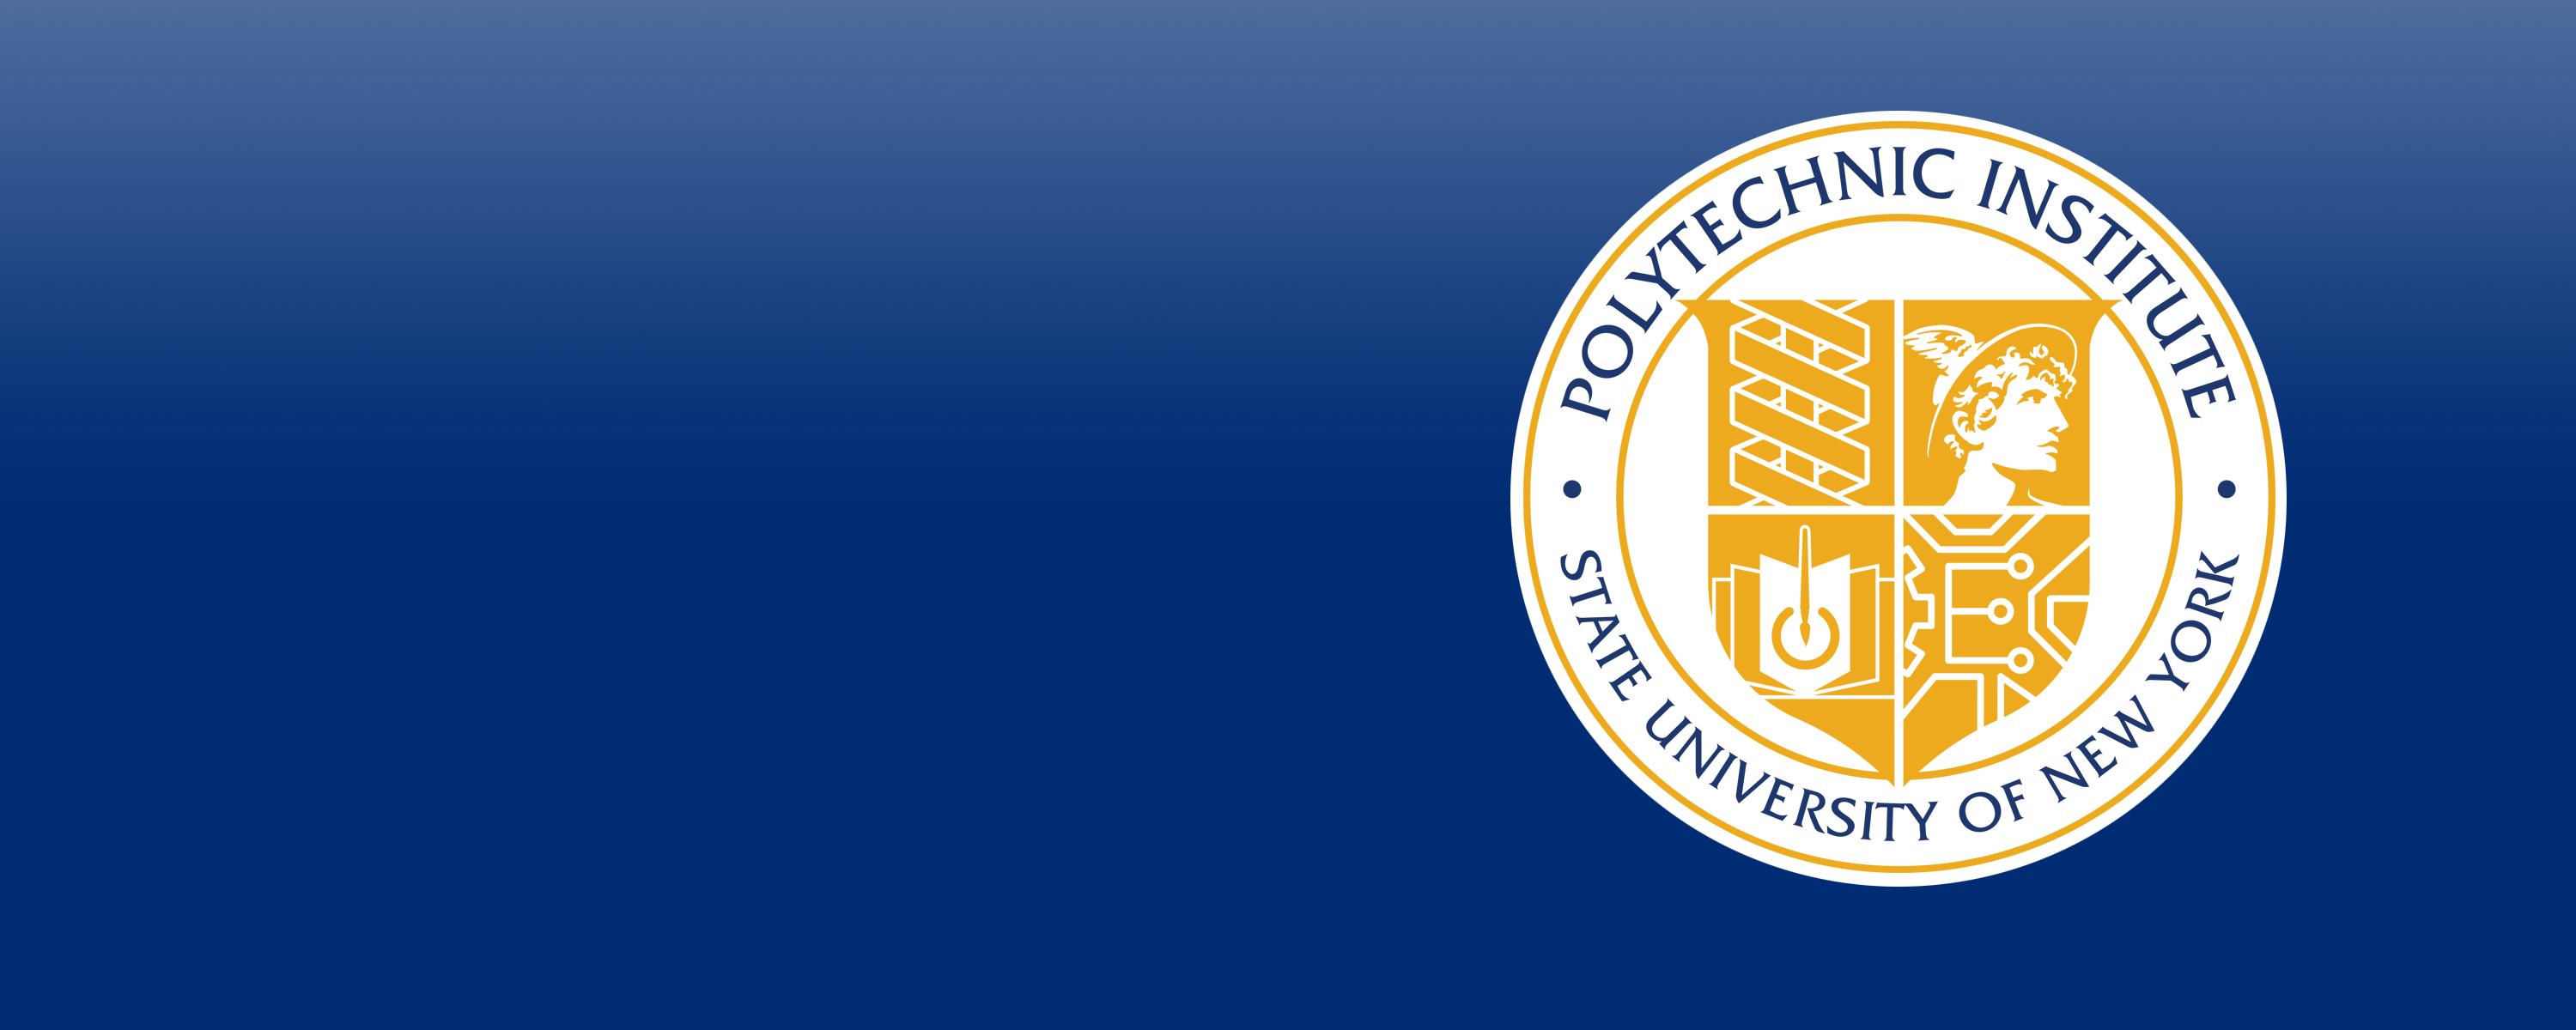 SUNY Polytechnic Institute seal